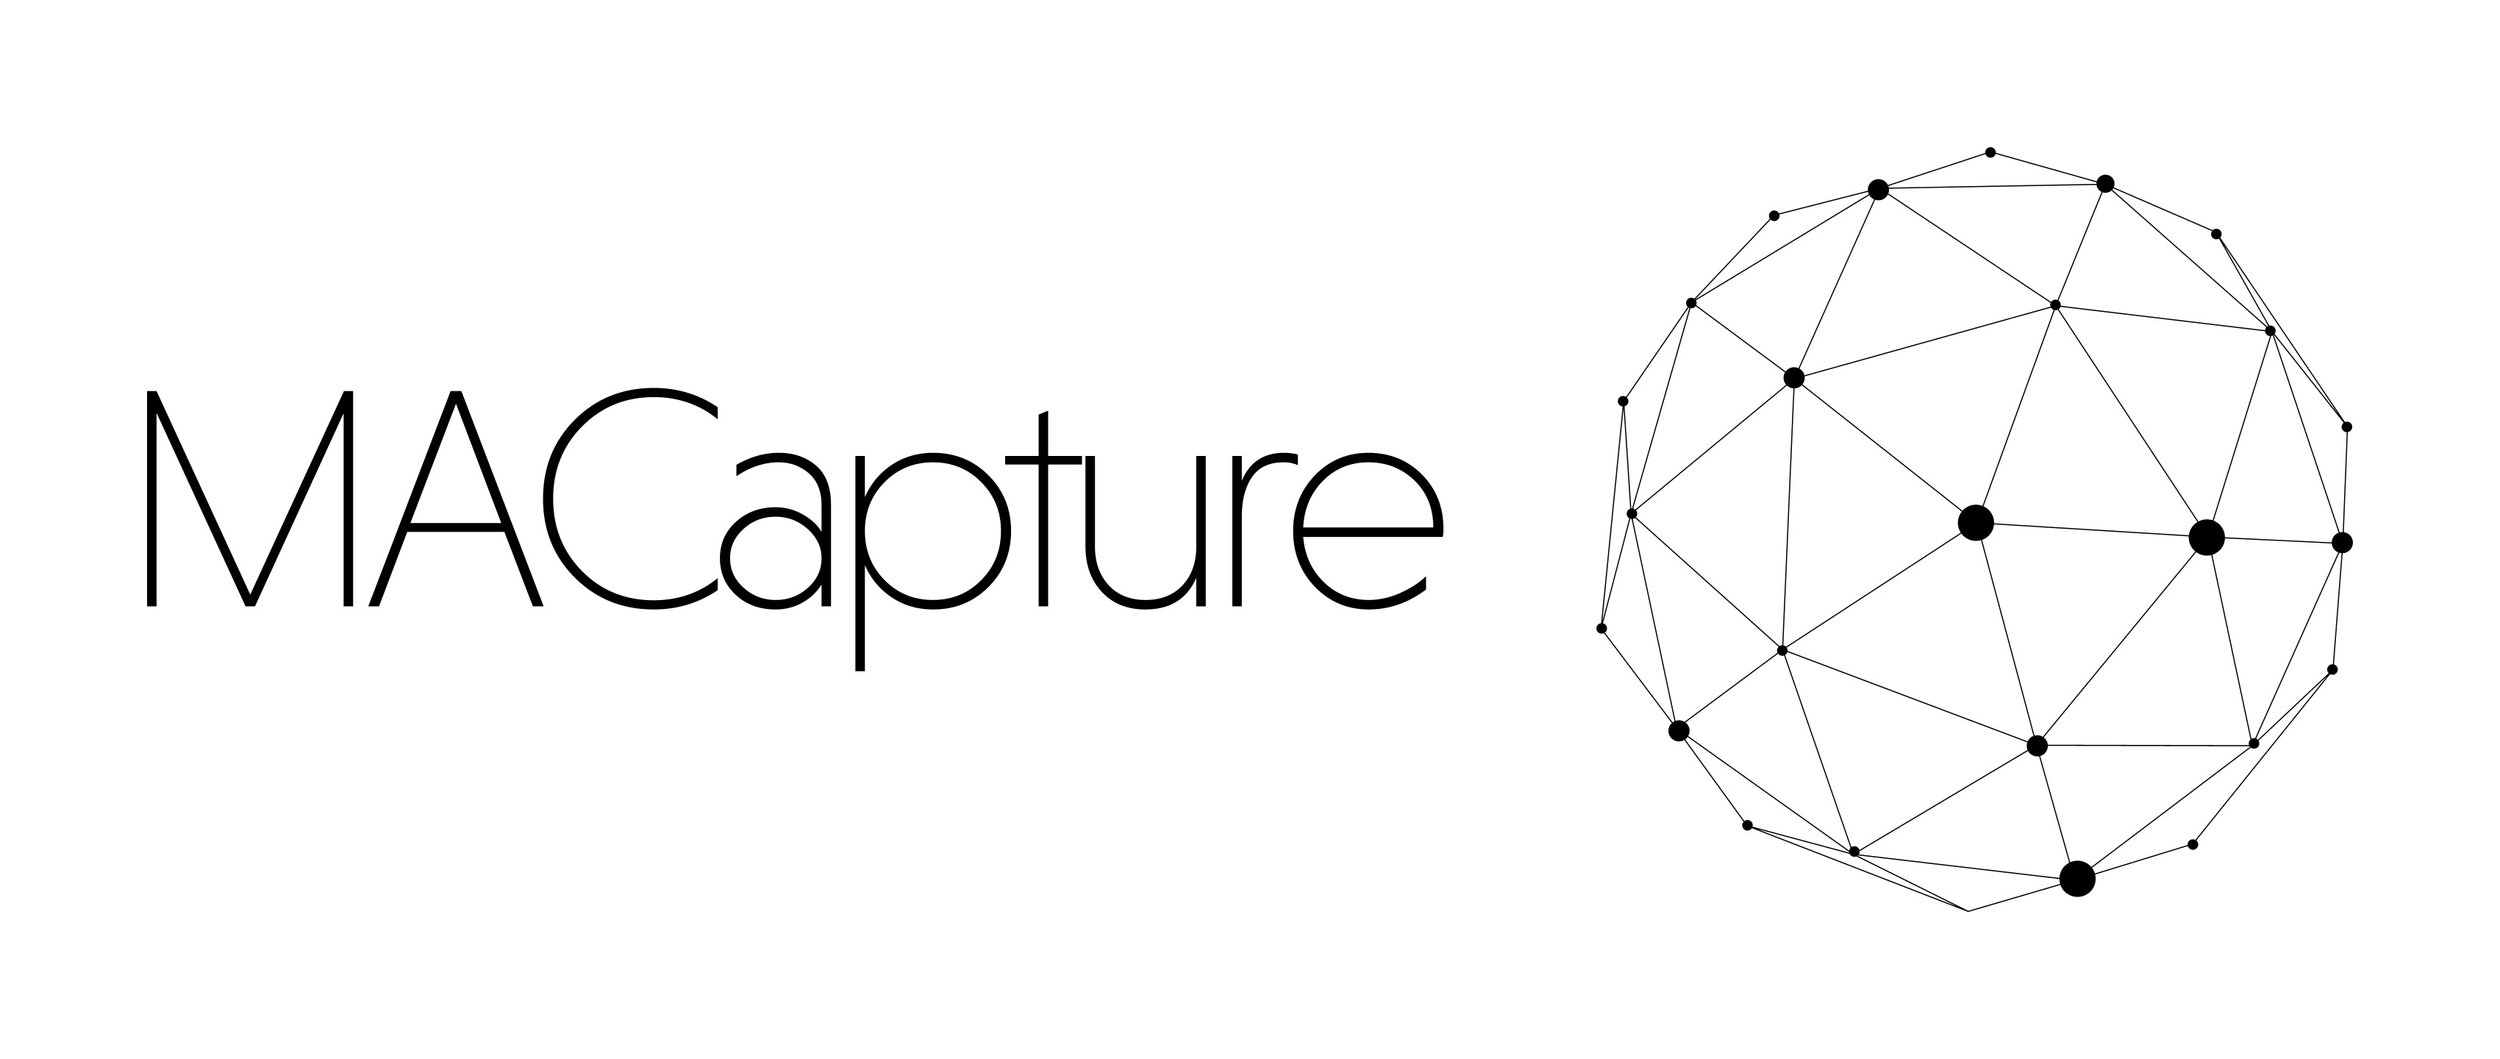 MACapture_logo_black_white.jpg